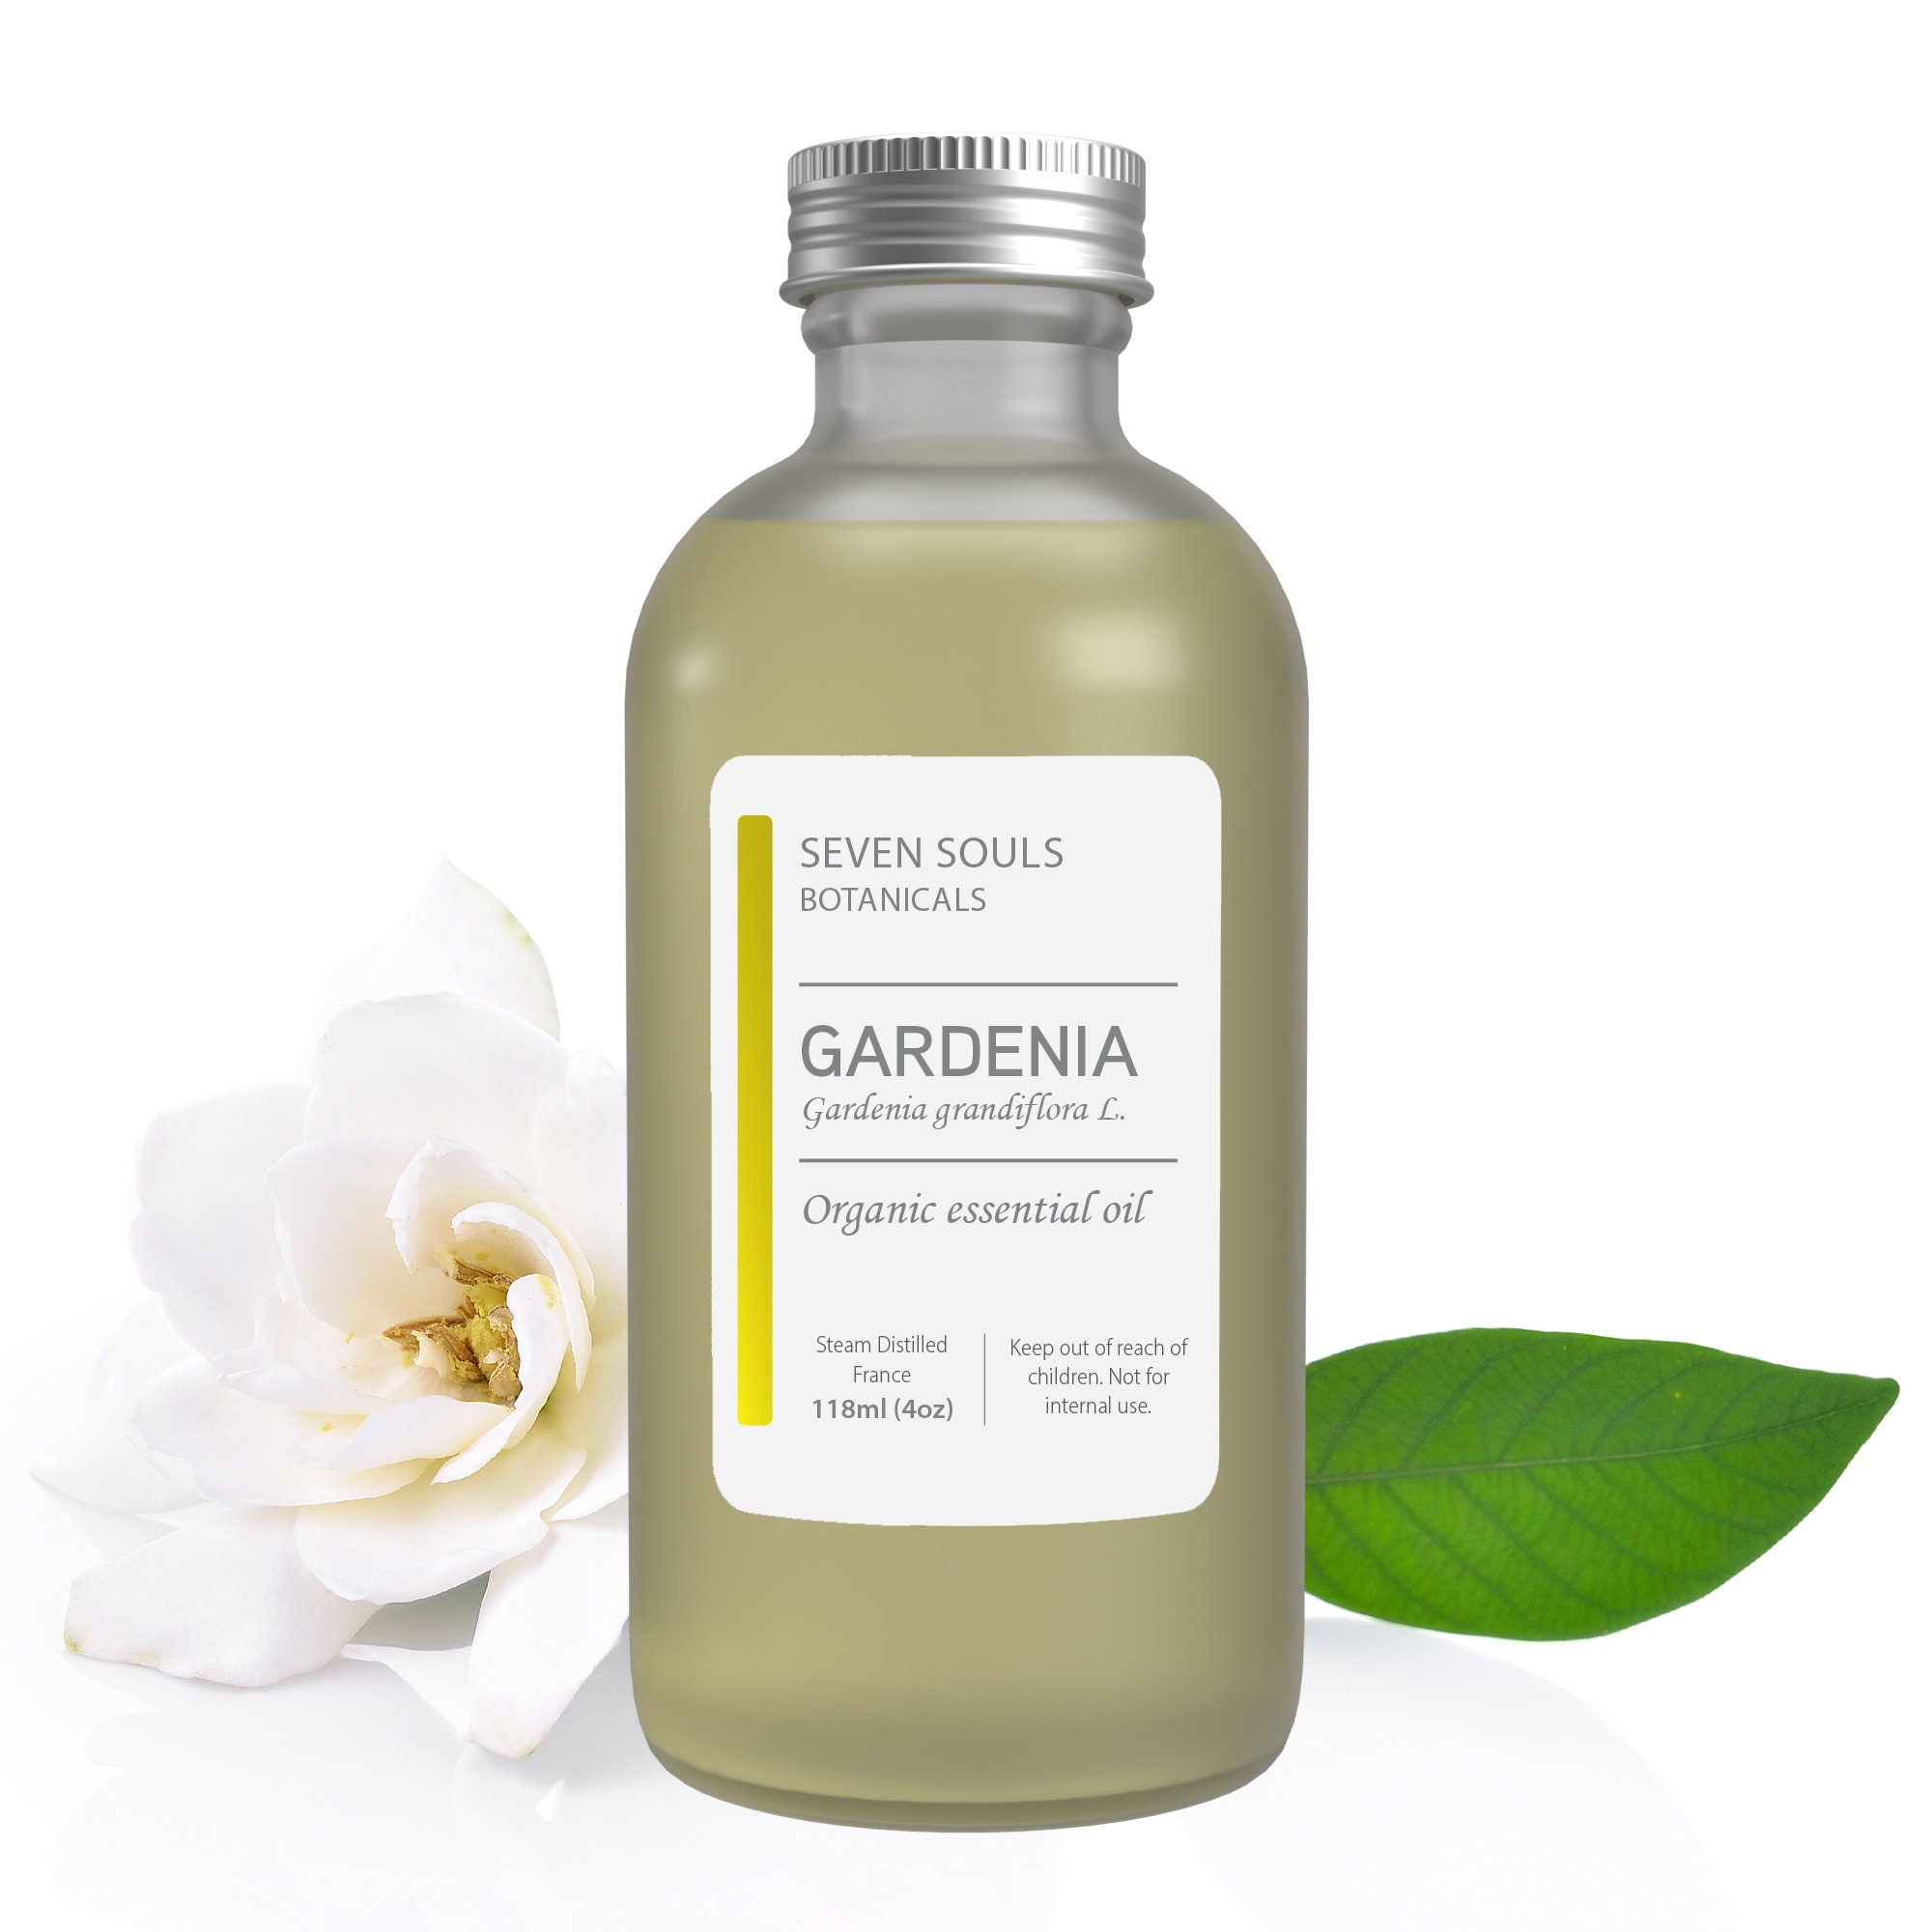 AOPING Rose & Gardenia Essential Oils - 100% Pure Organic Plant Oils for  Aromatherapy, Spa, Massage, Yoga, Perfume, Body Care - 2x10ML